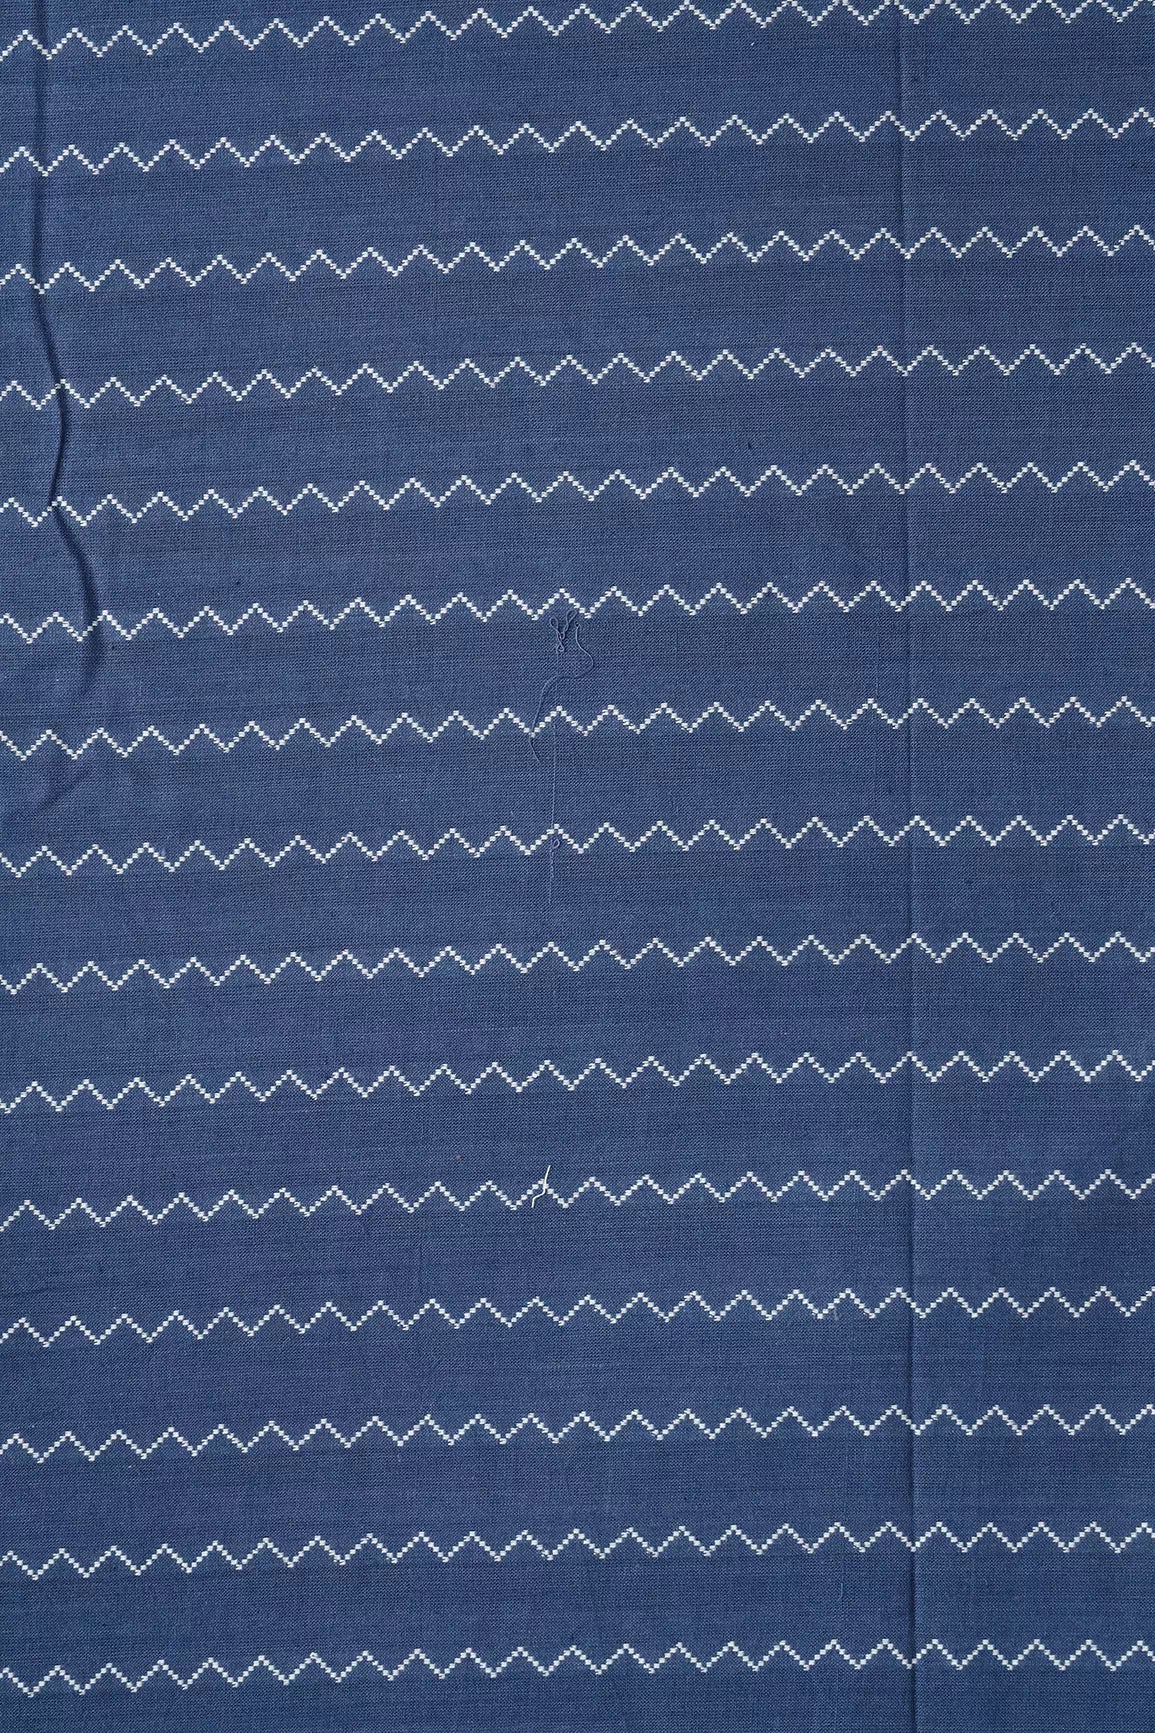 Blue And White Chevron Pattern On Handwoven Organic Cotton Fabric